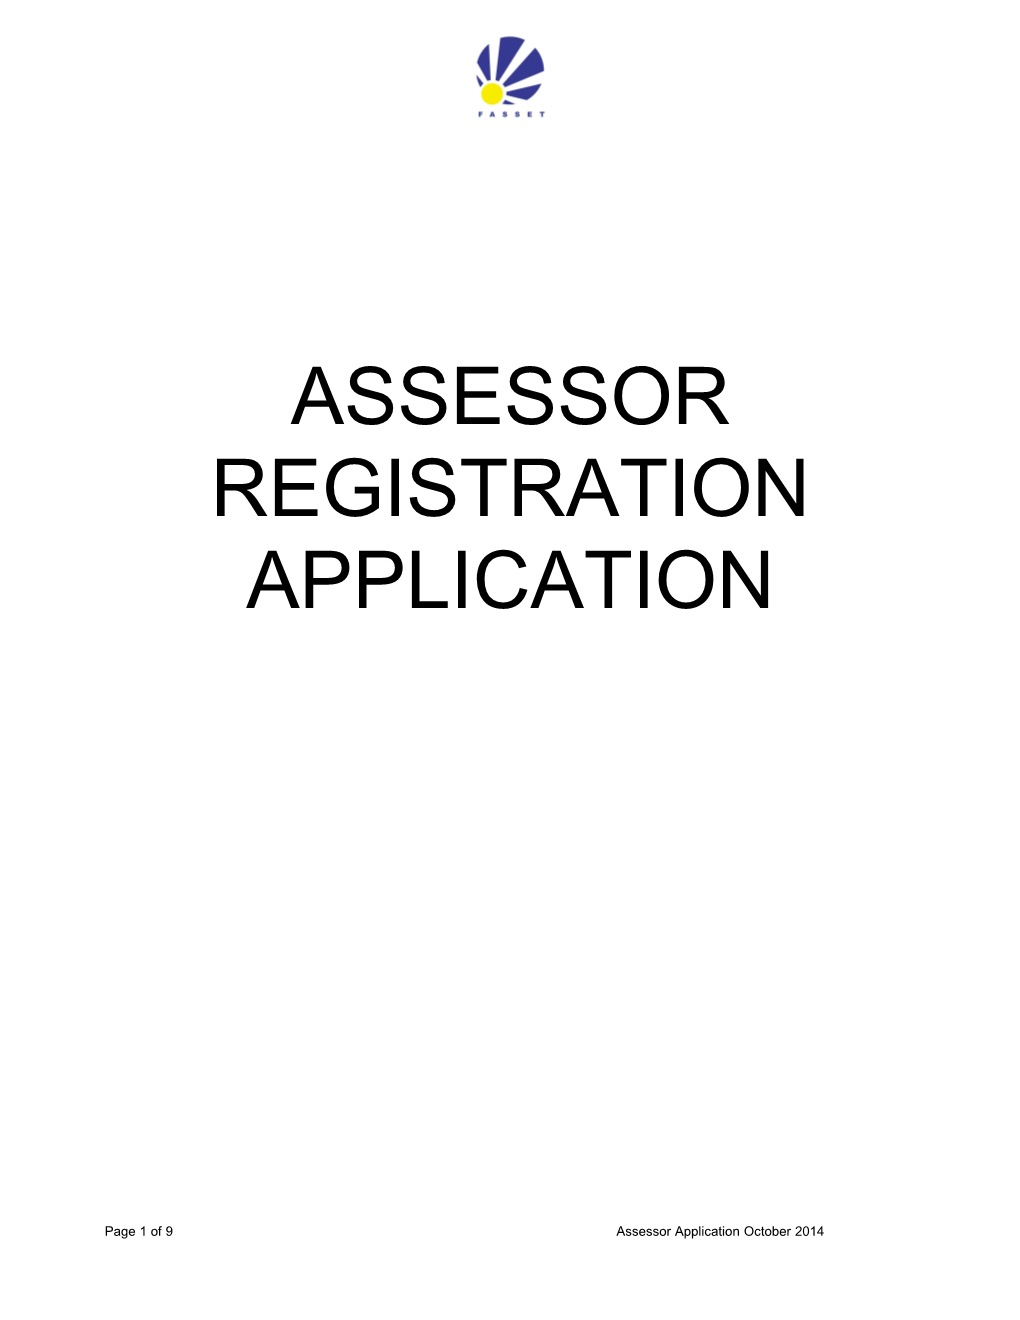 Assessor Registration Application